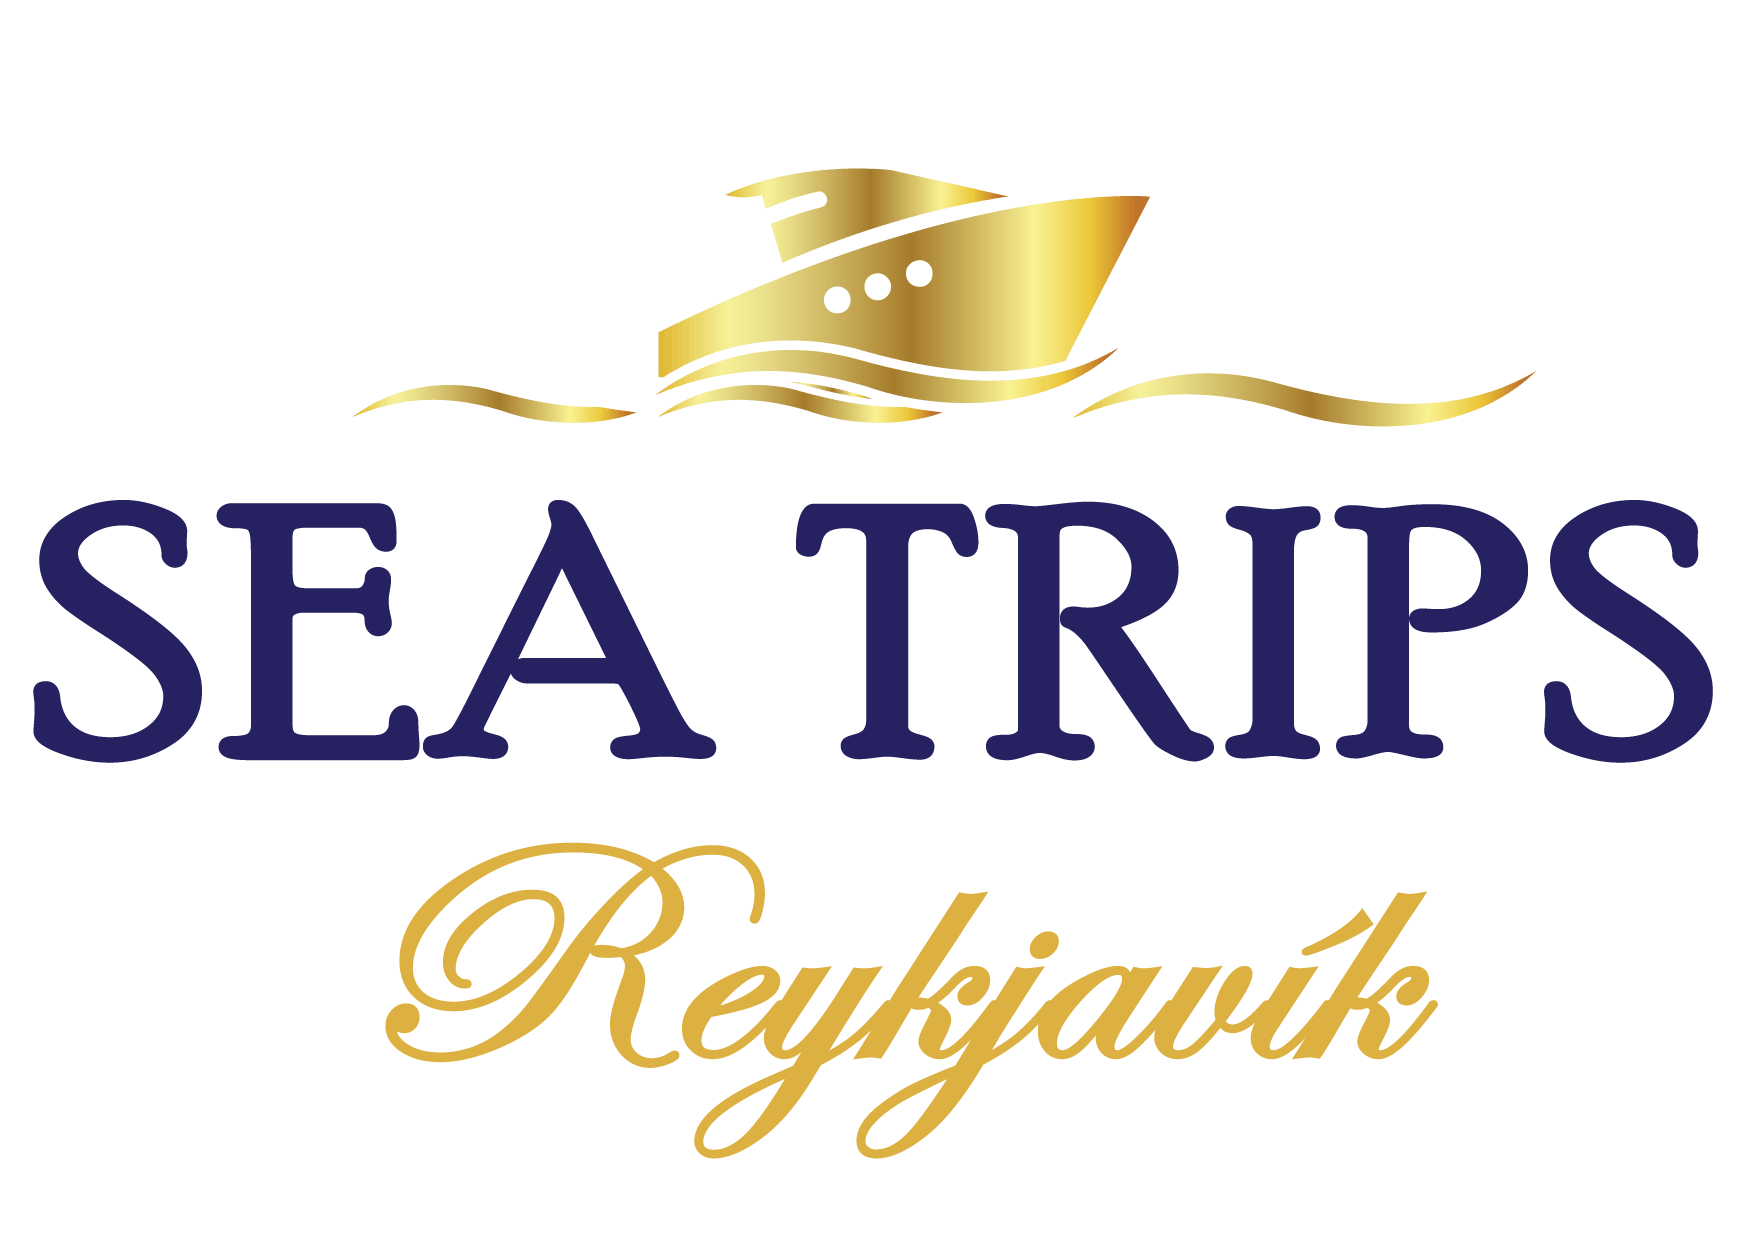 sea trips reykjavík logo small-01.png